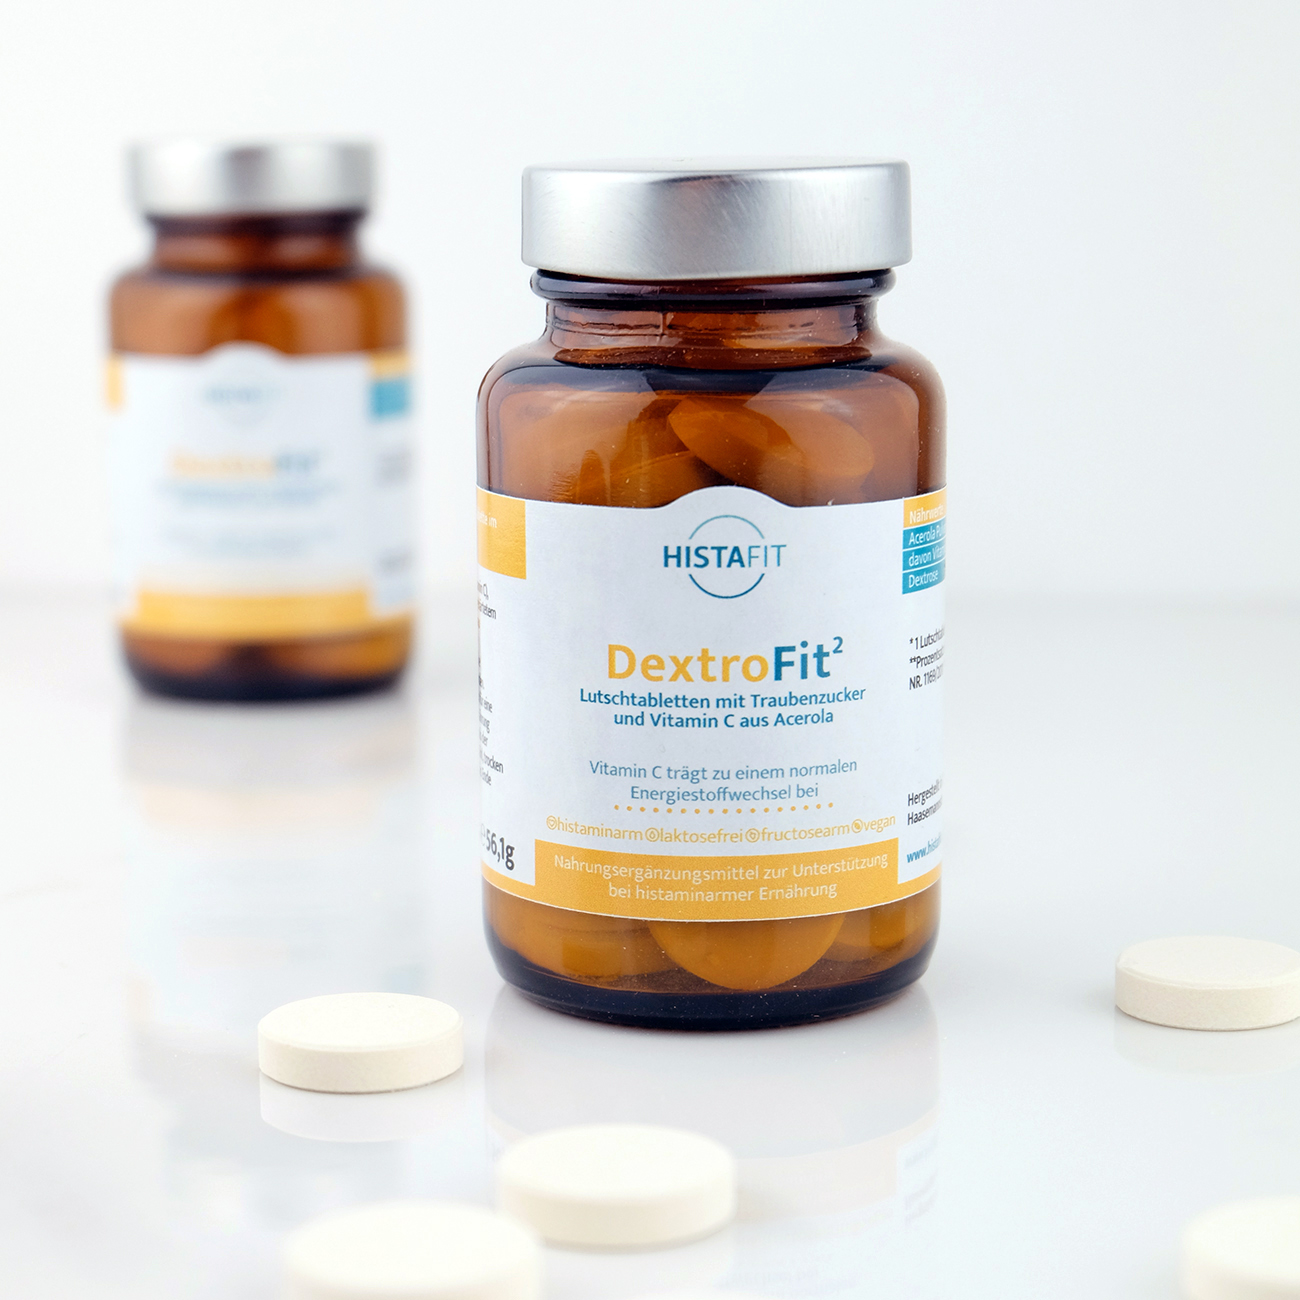 HistaFit DextroFit2 – histaminarmer Traubenzucker